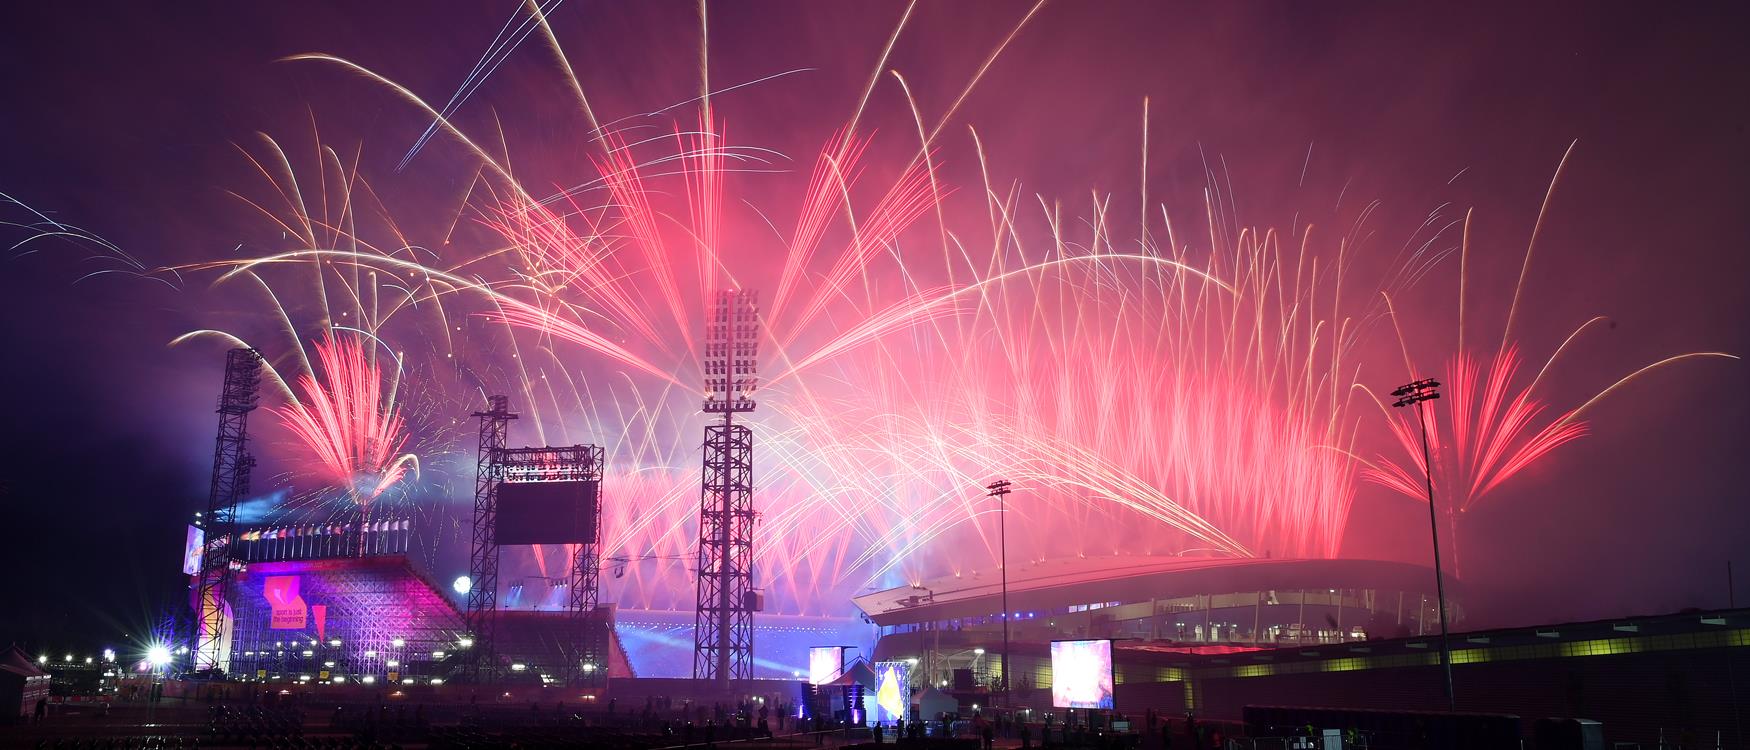 Birmingham 2022 Commonwealth Games Closing Ceremony via Getty Images